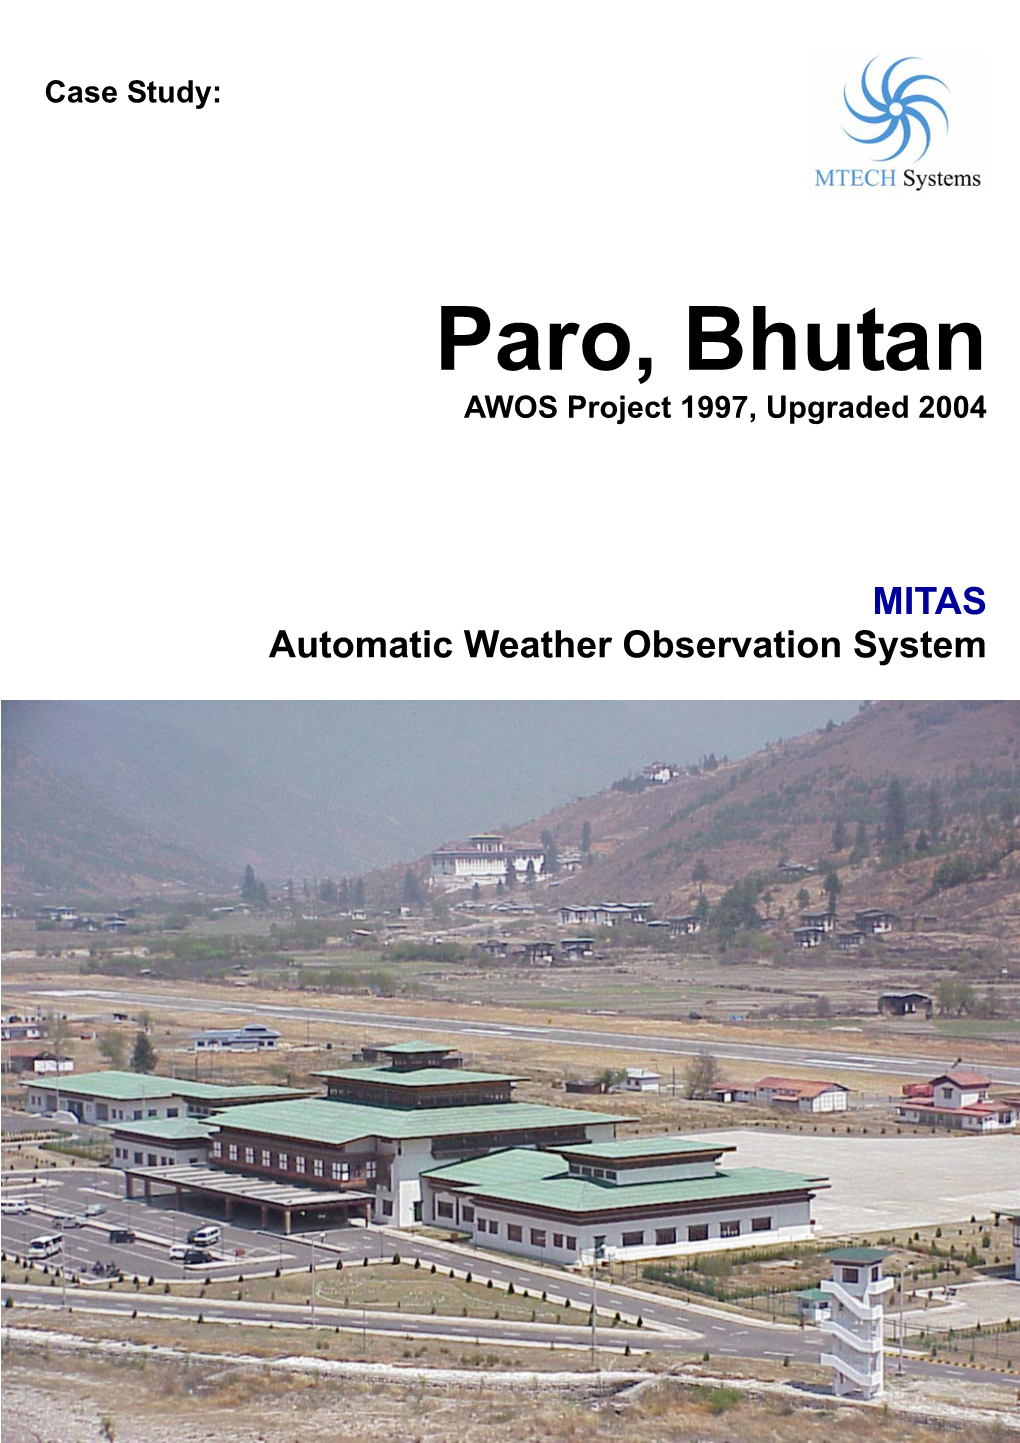 Paro, Bhutan AWOS Project 1997, Upgraded 2004